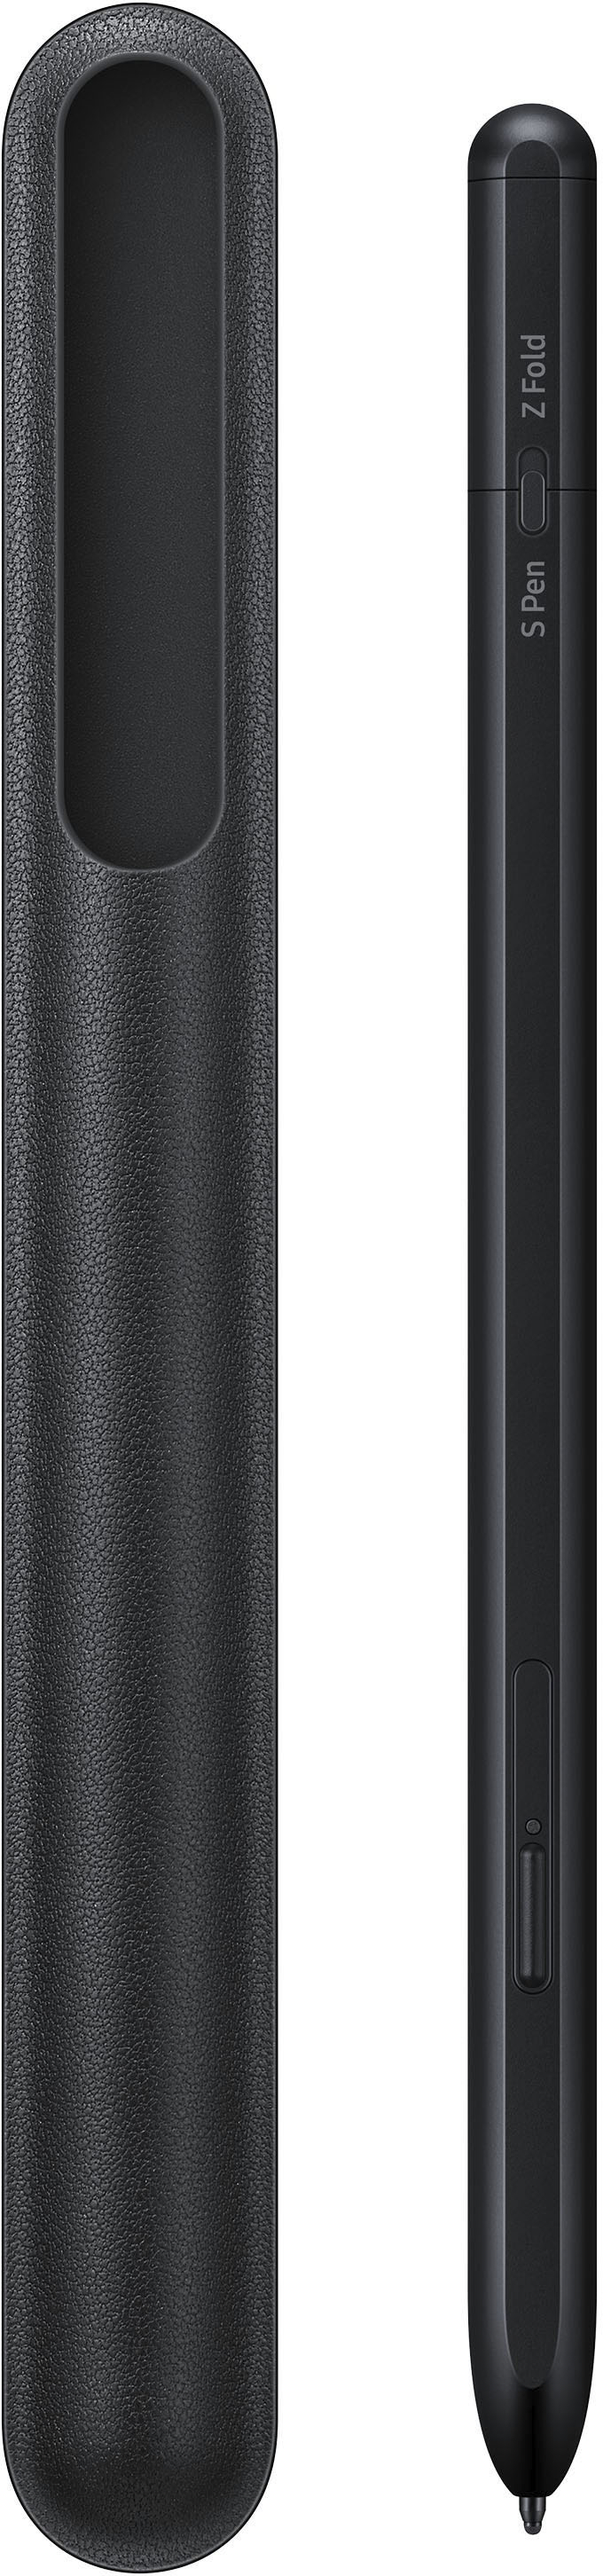 Knop Merchandiser achter Samsung S Pen Pro Black EJ-P5450SBEGUS - Best Buy